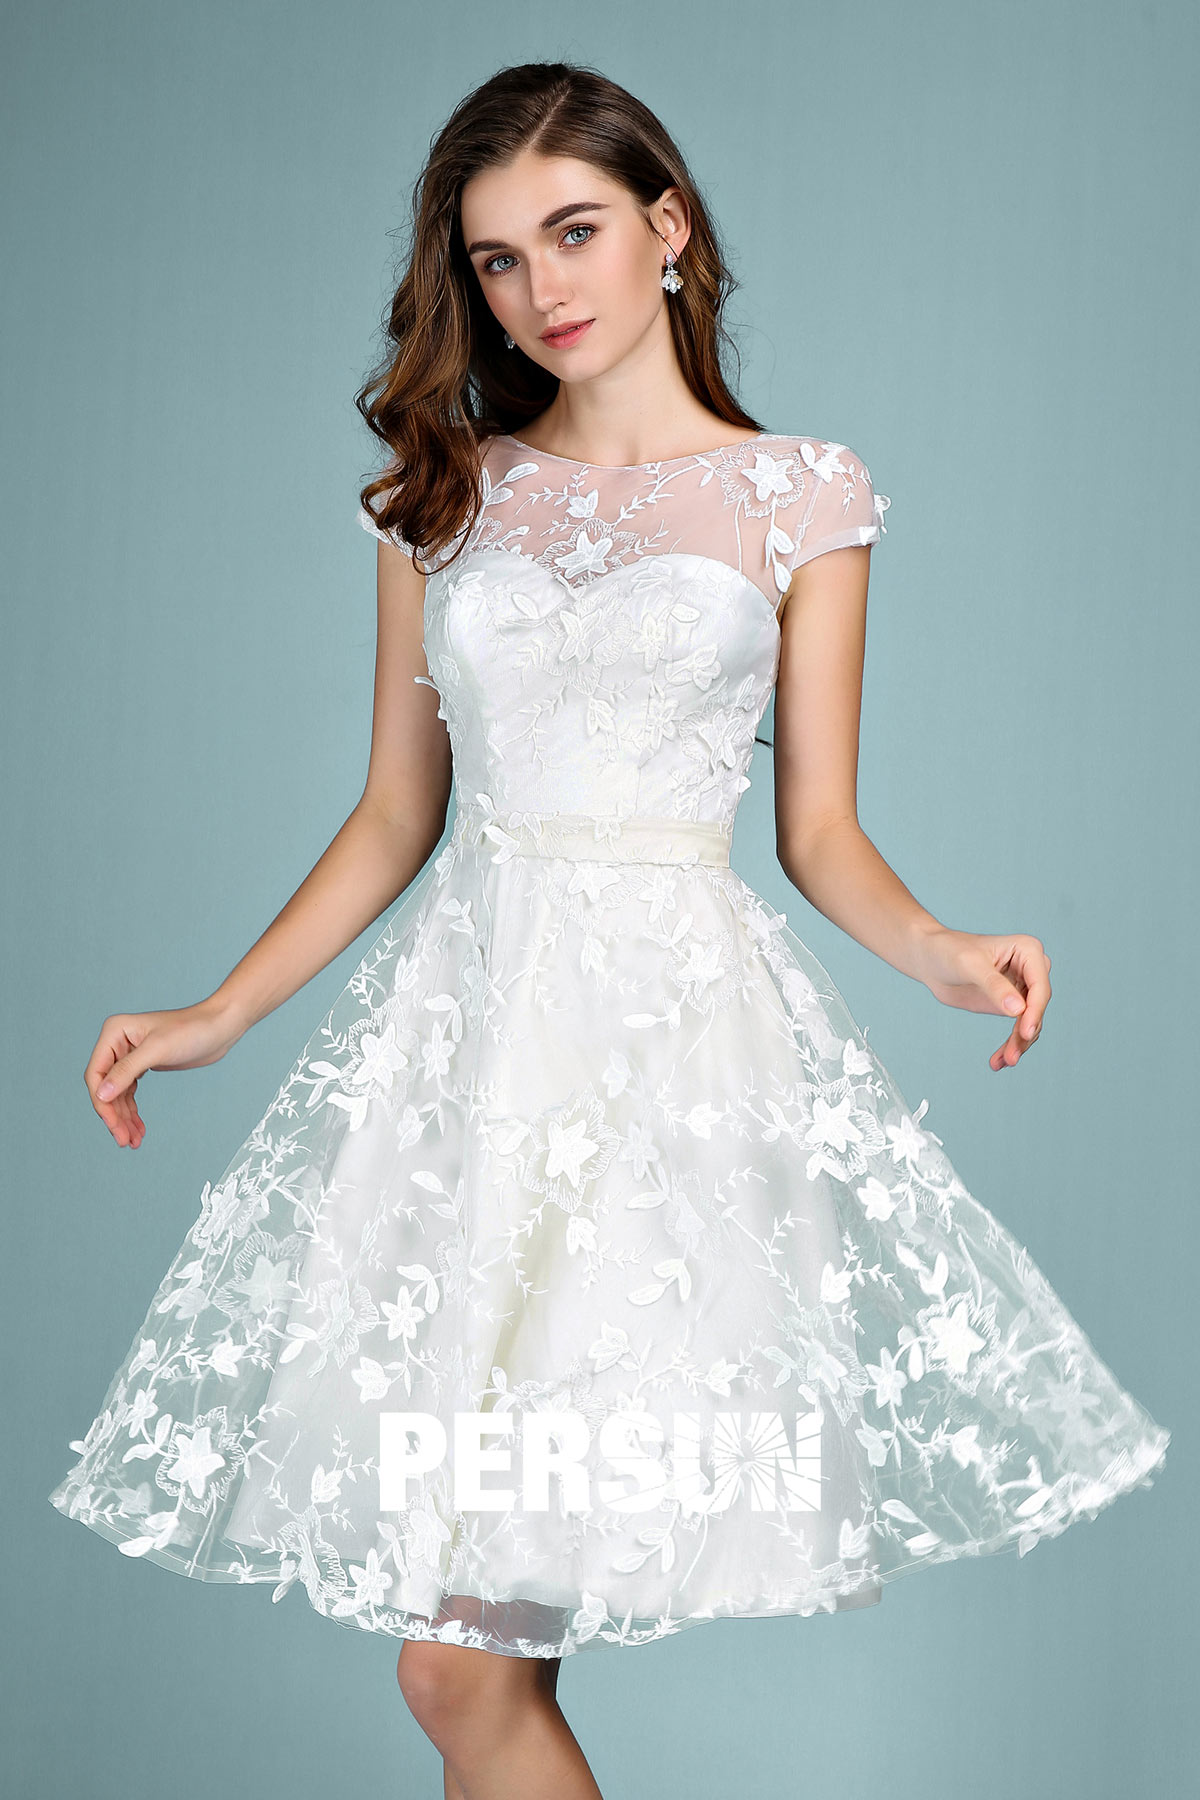 petite-robe-dentelle-mariage-civil-persun-2019.jpg?profile=RESIZE_710x